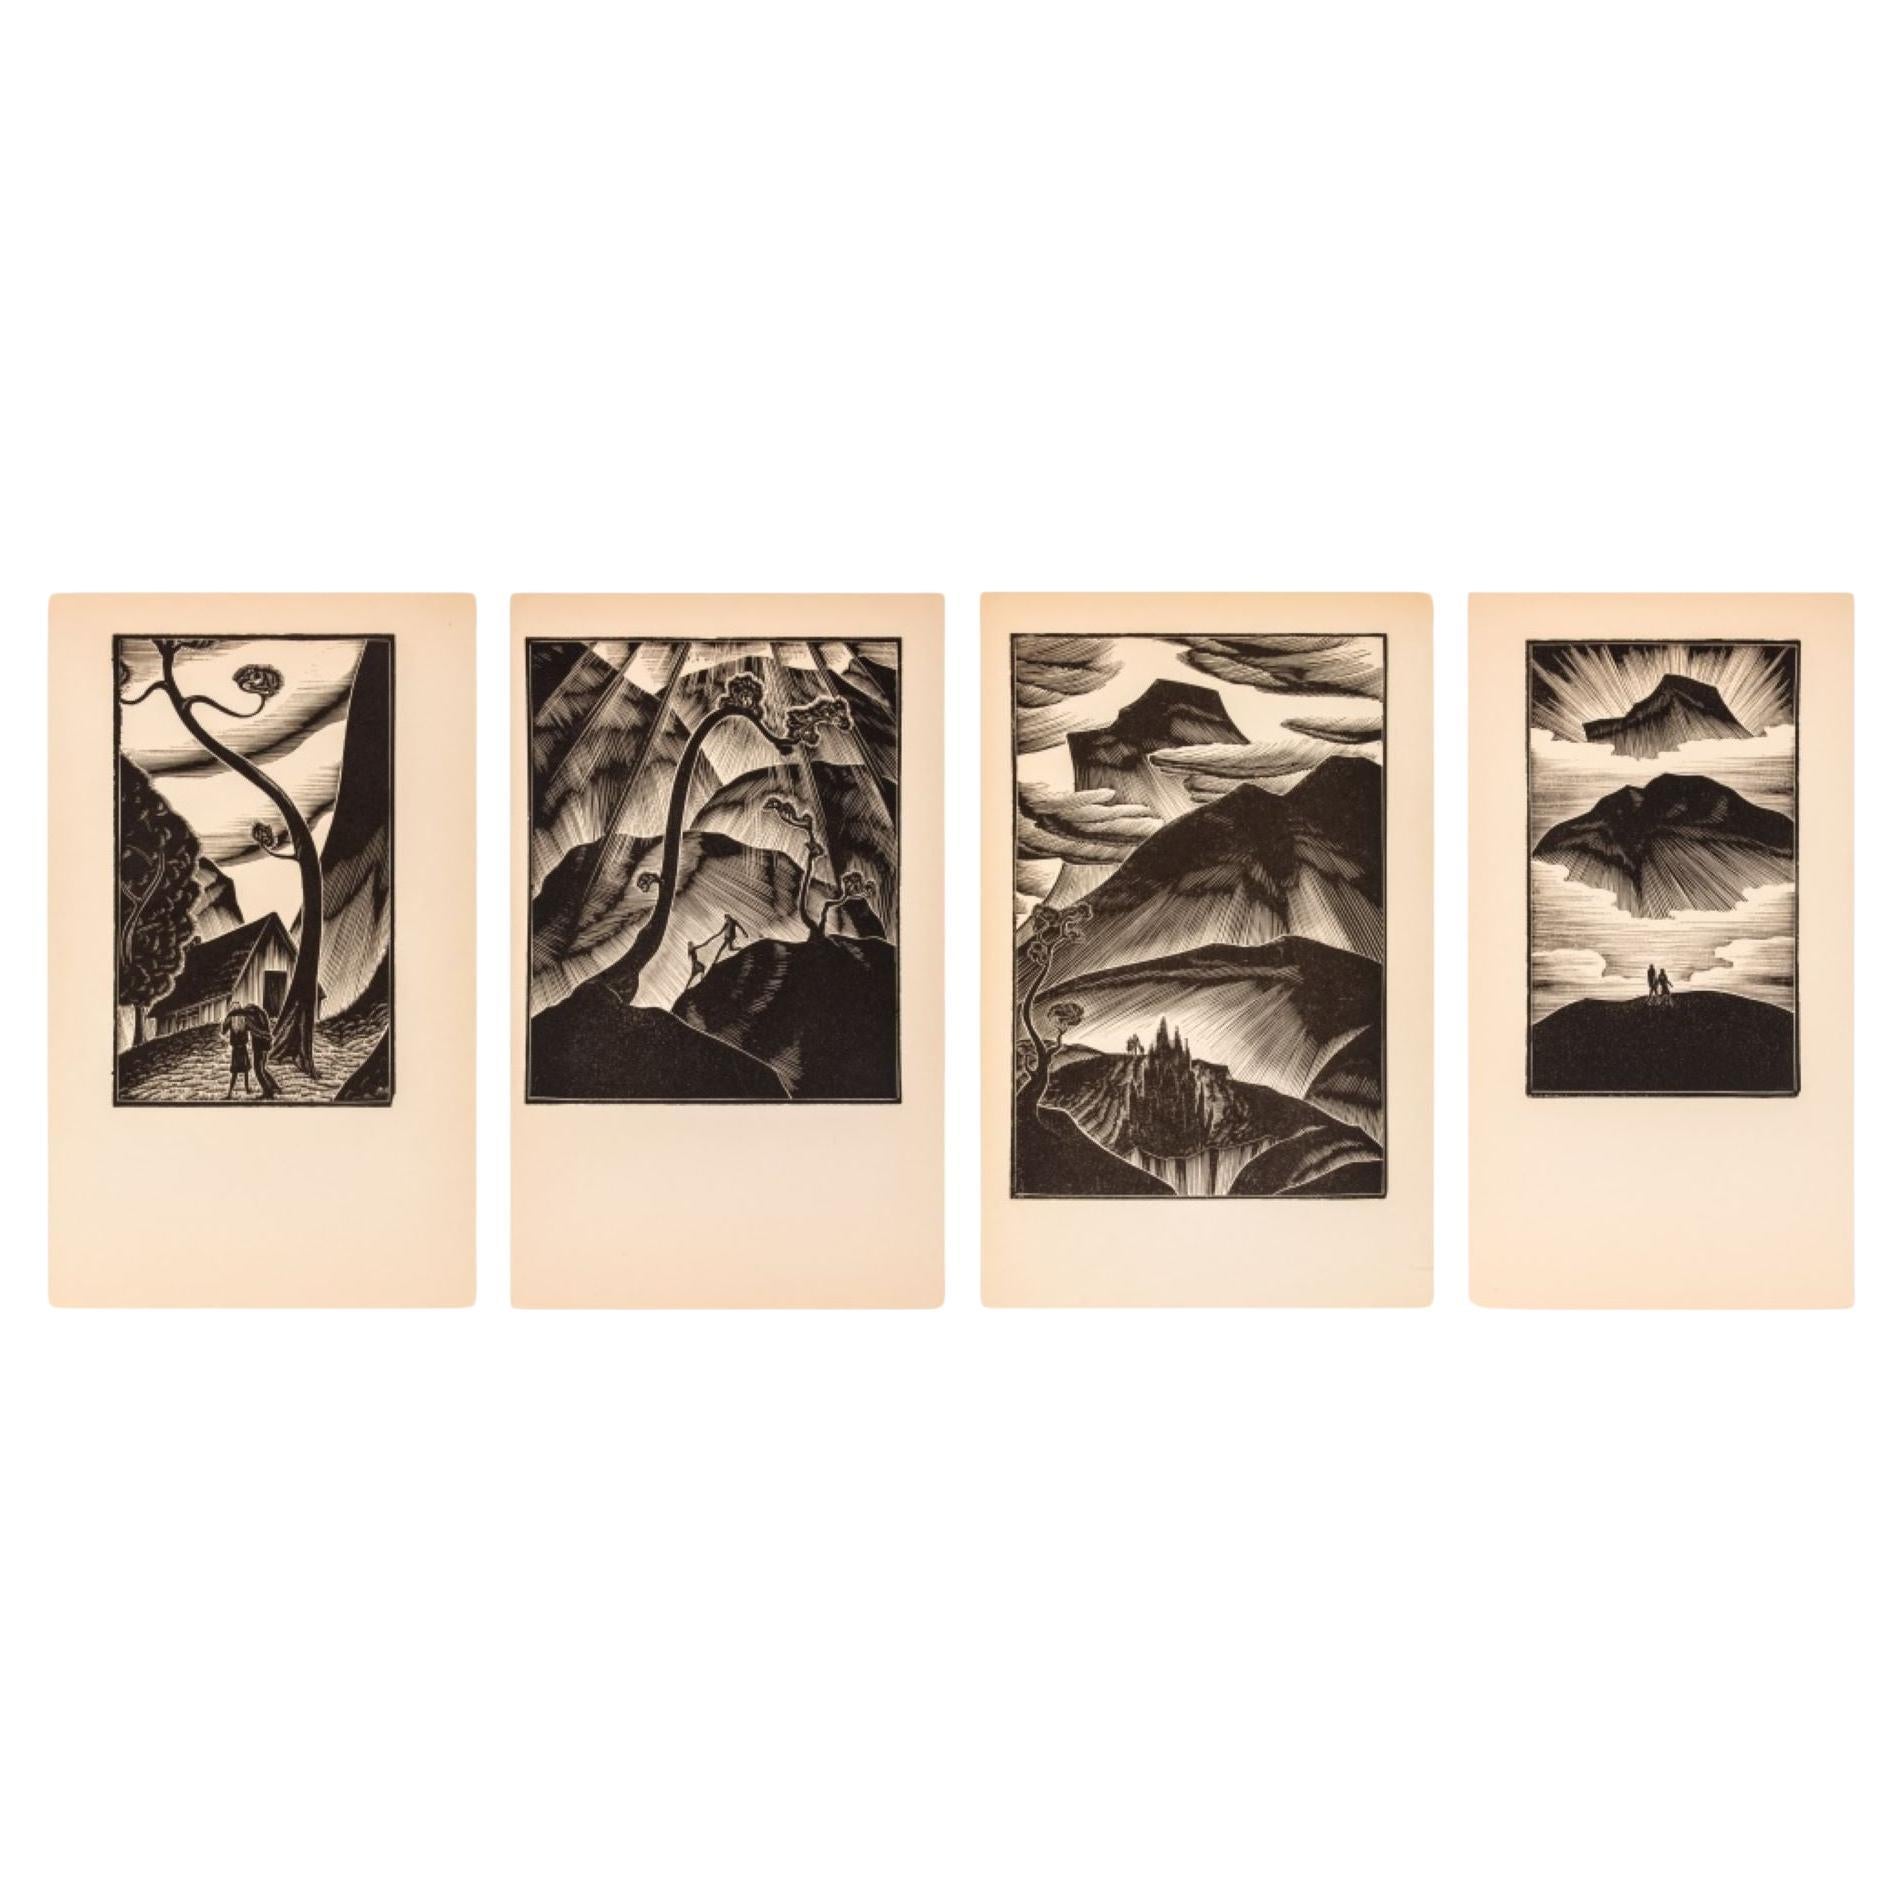 Lynd Ward "Gods' Man" Woodblock Prints, 4 For Sale